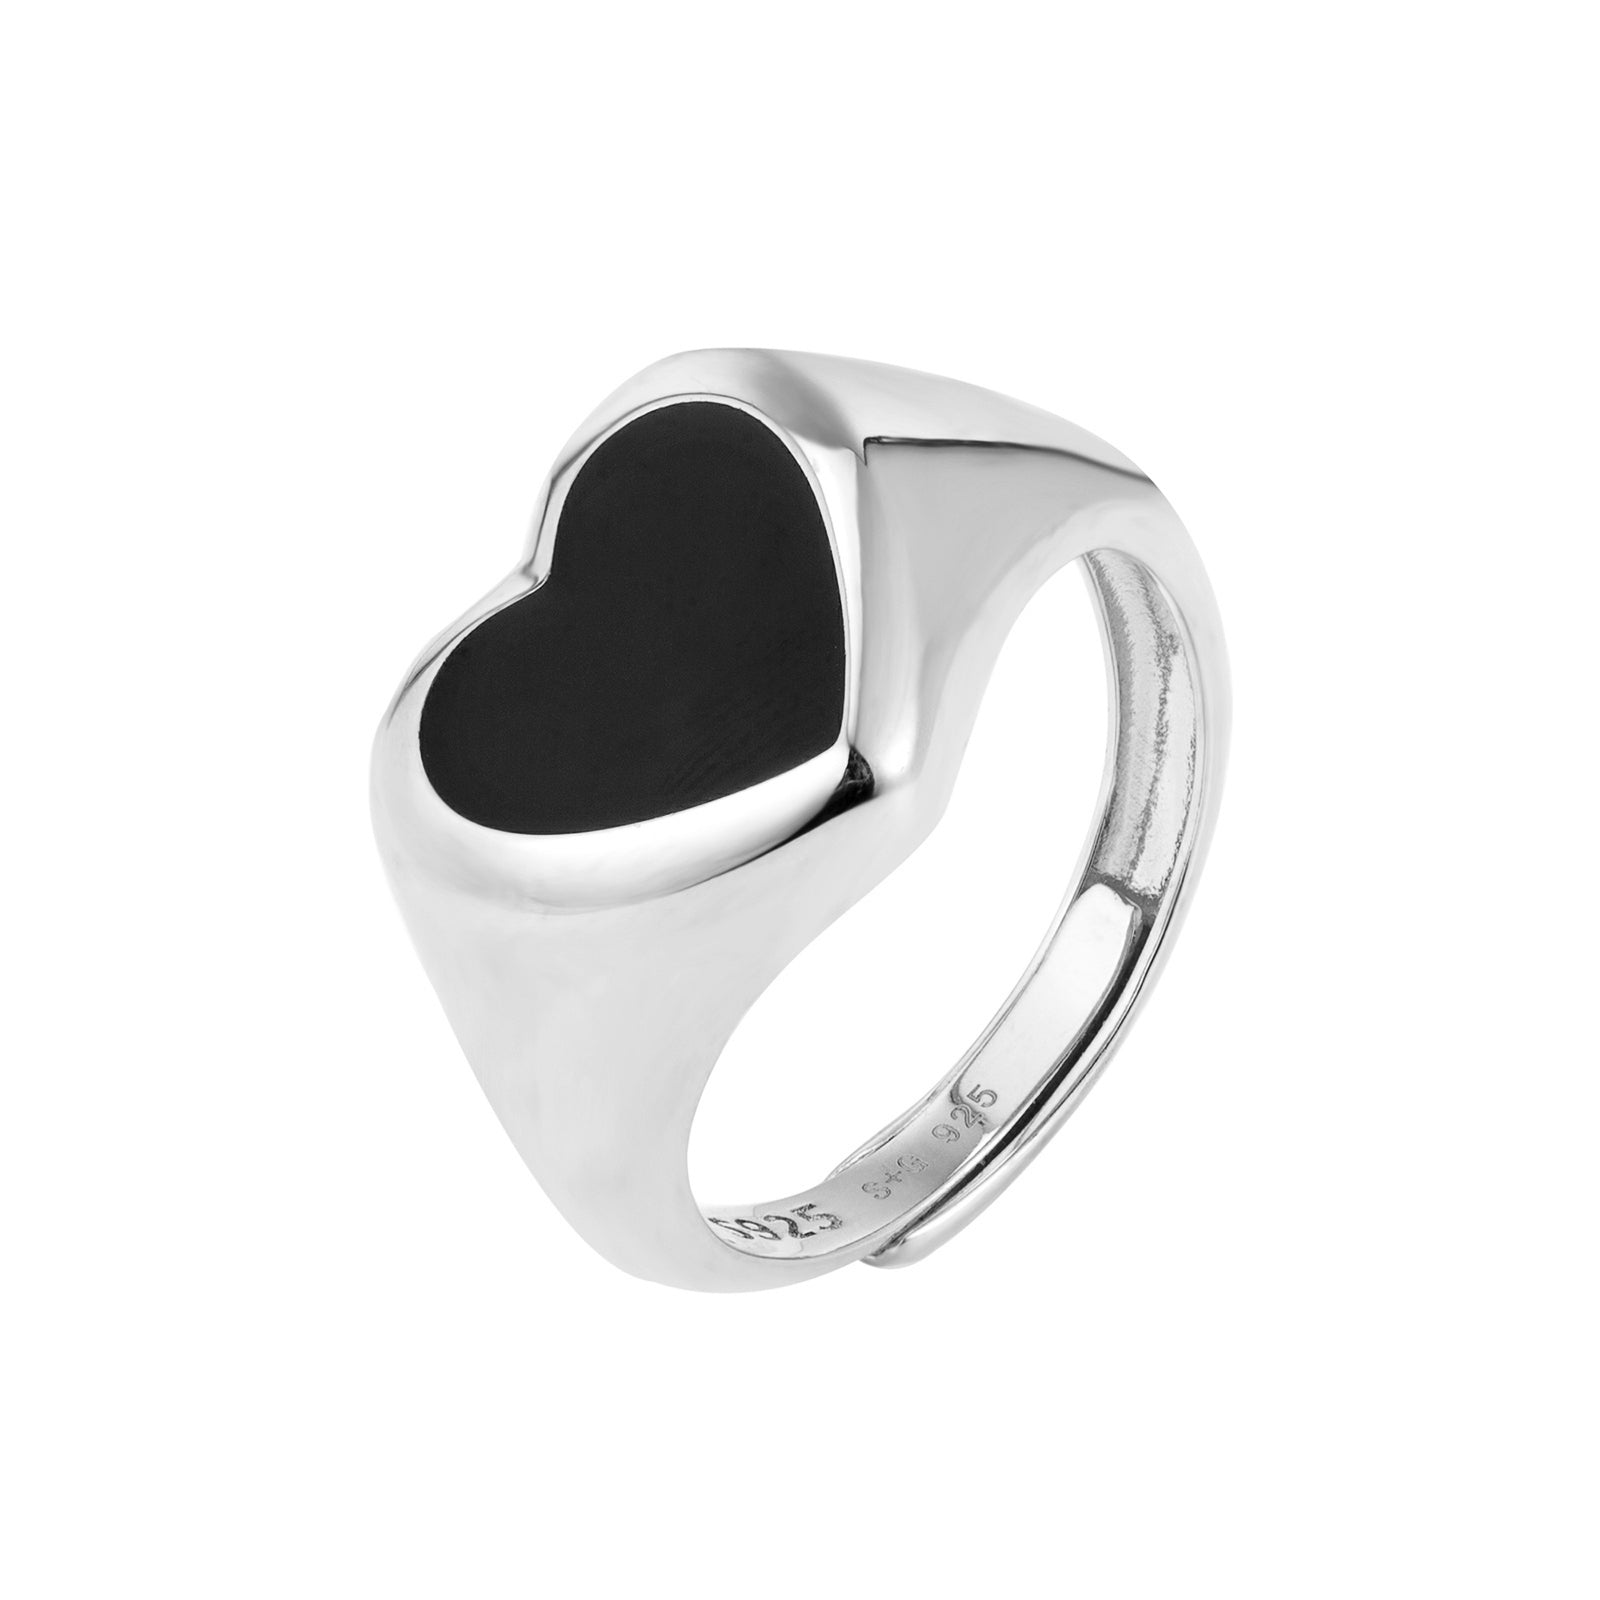  seol gold - onyx heart adjustable signet ring - seol + gold